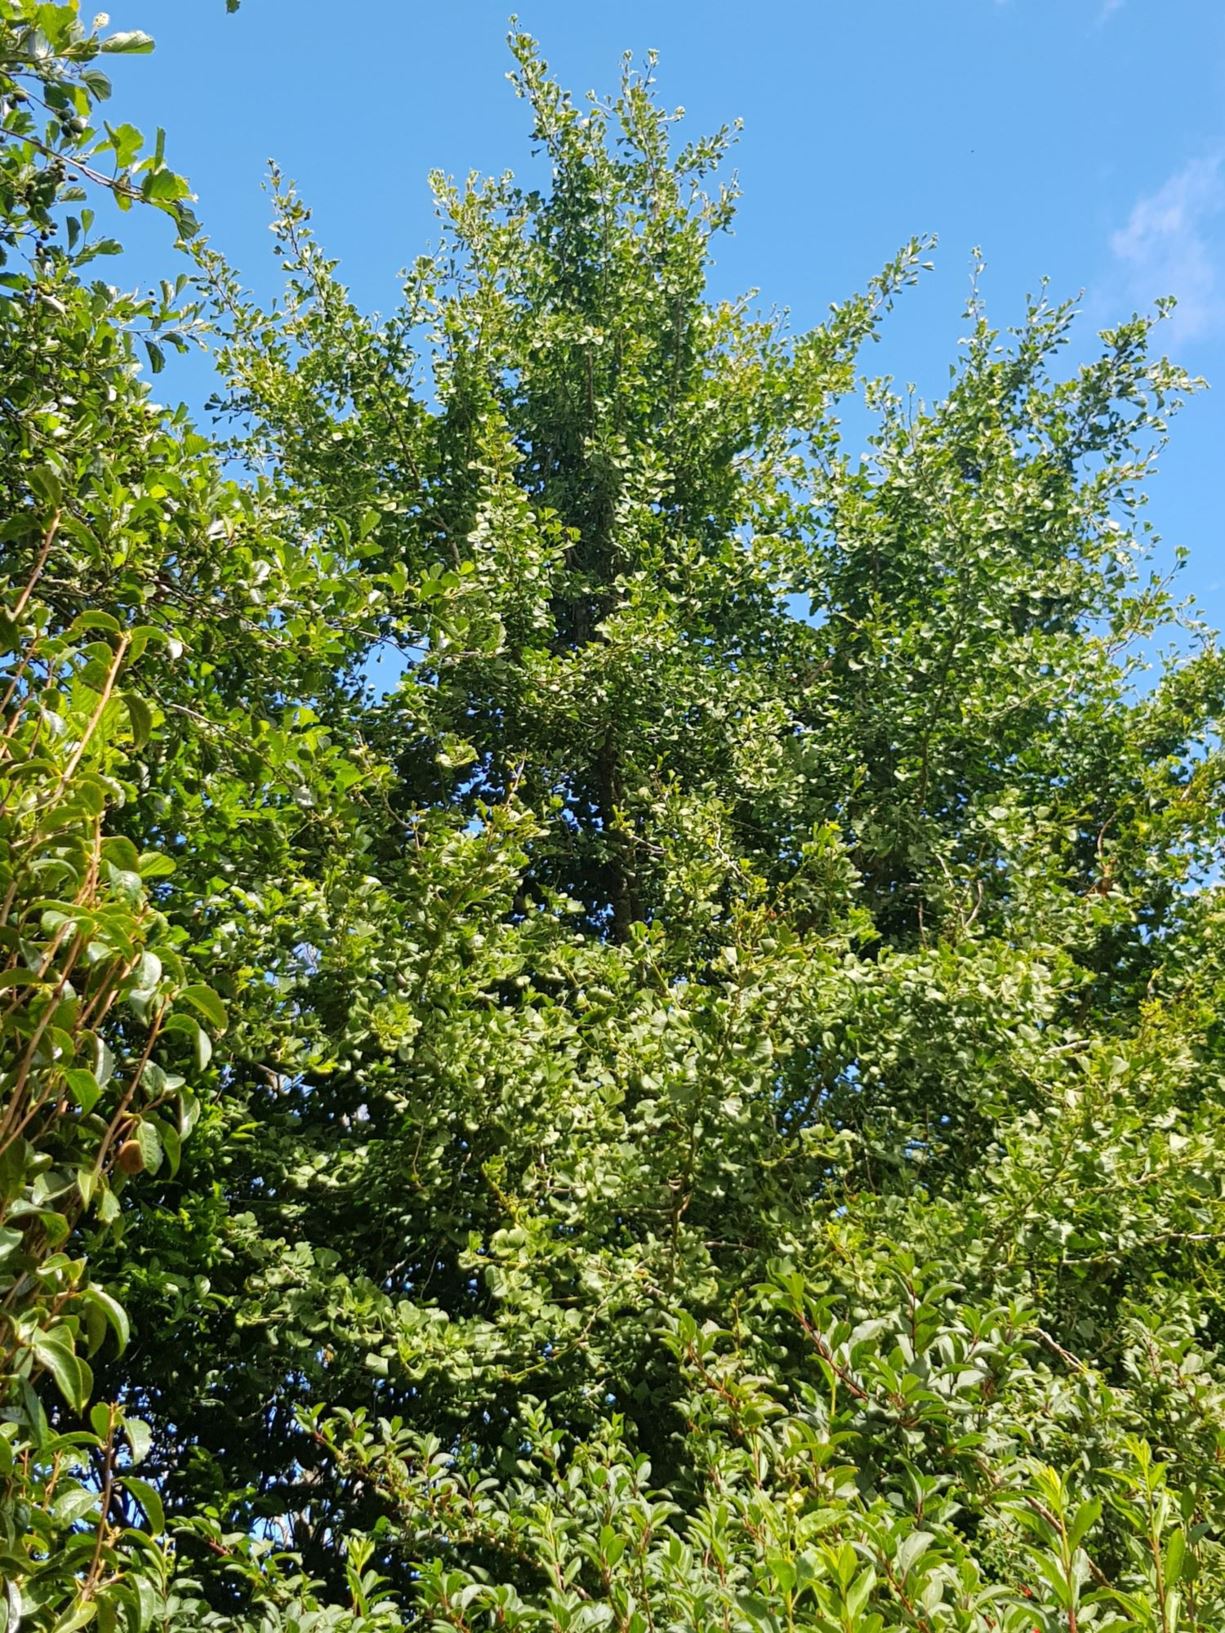 Ginkgo biloba - maidenhair tree